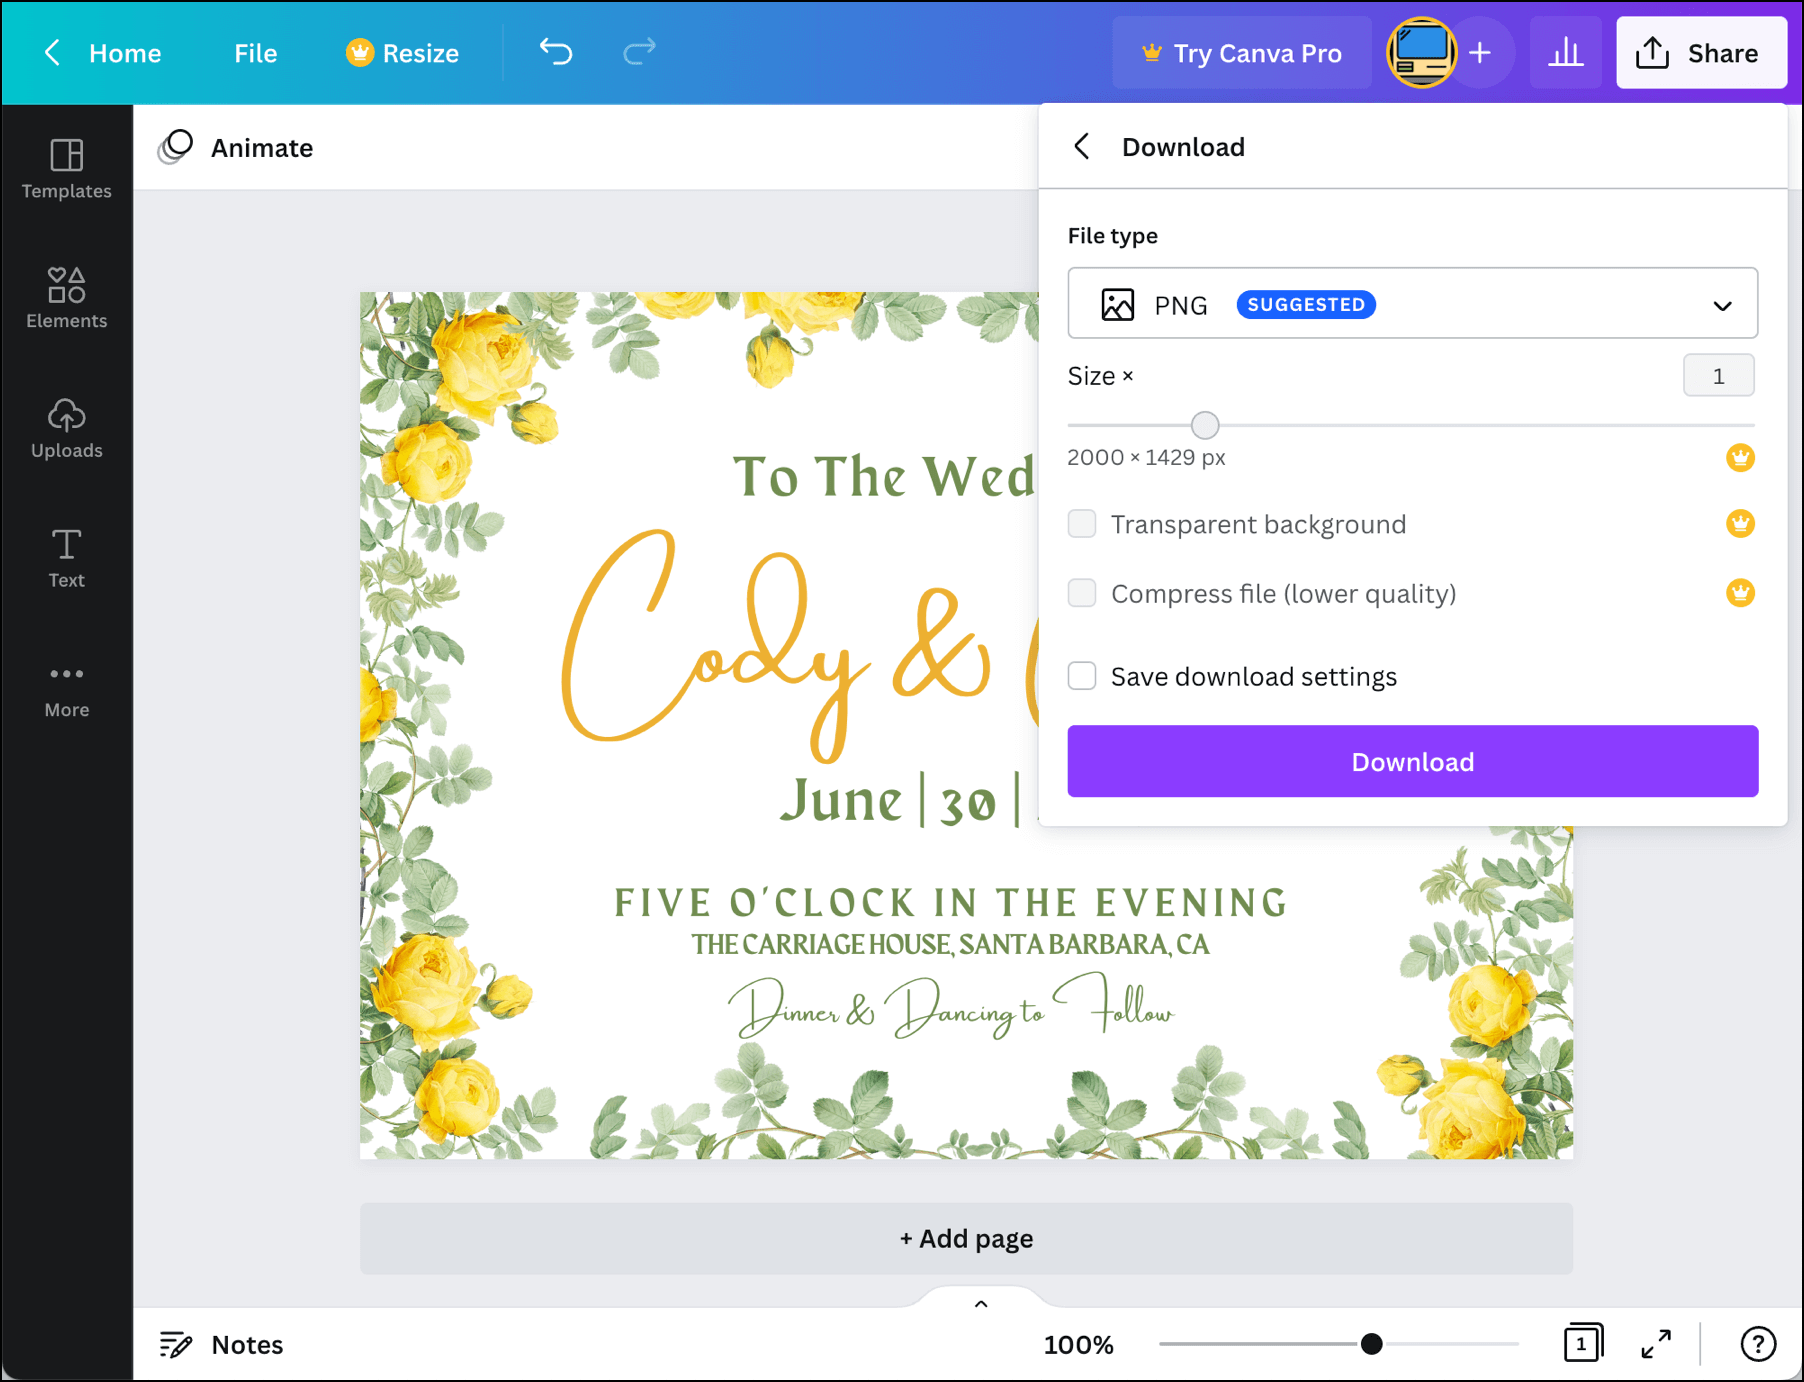 Download your wedding invite design